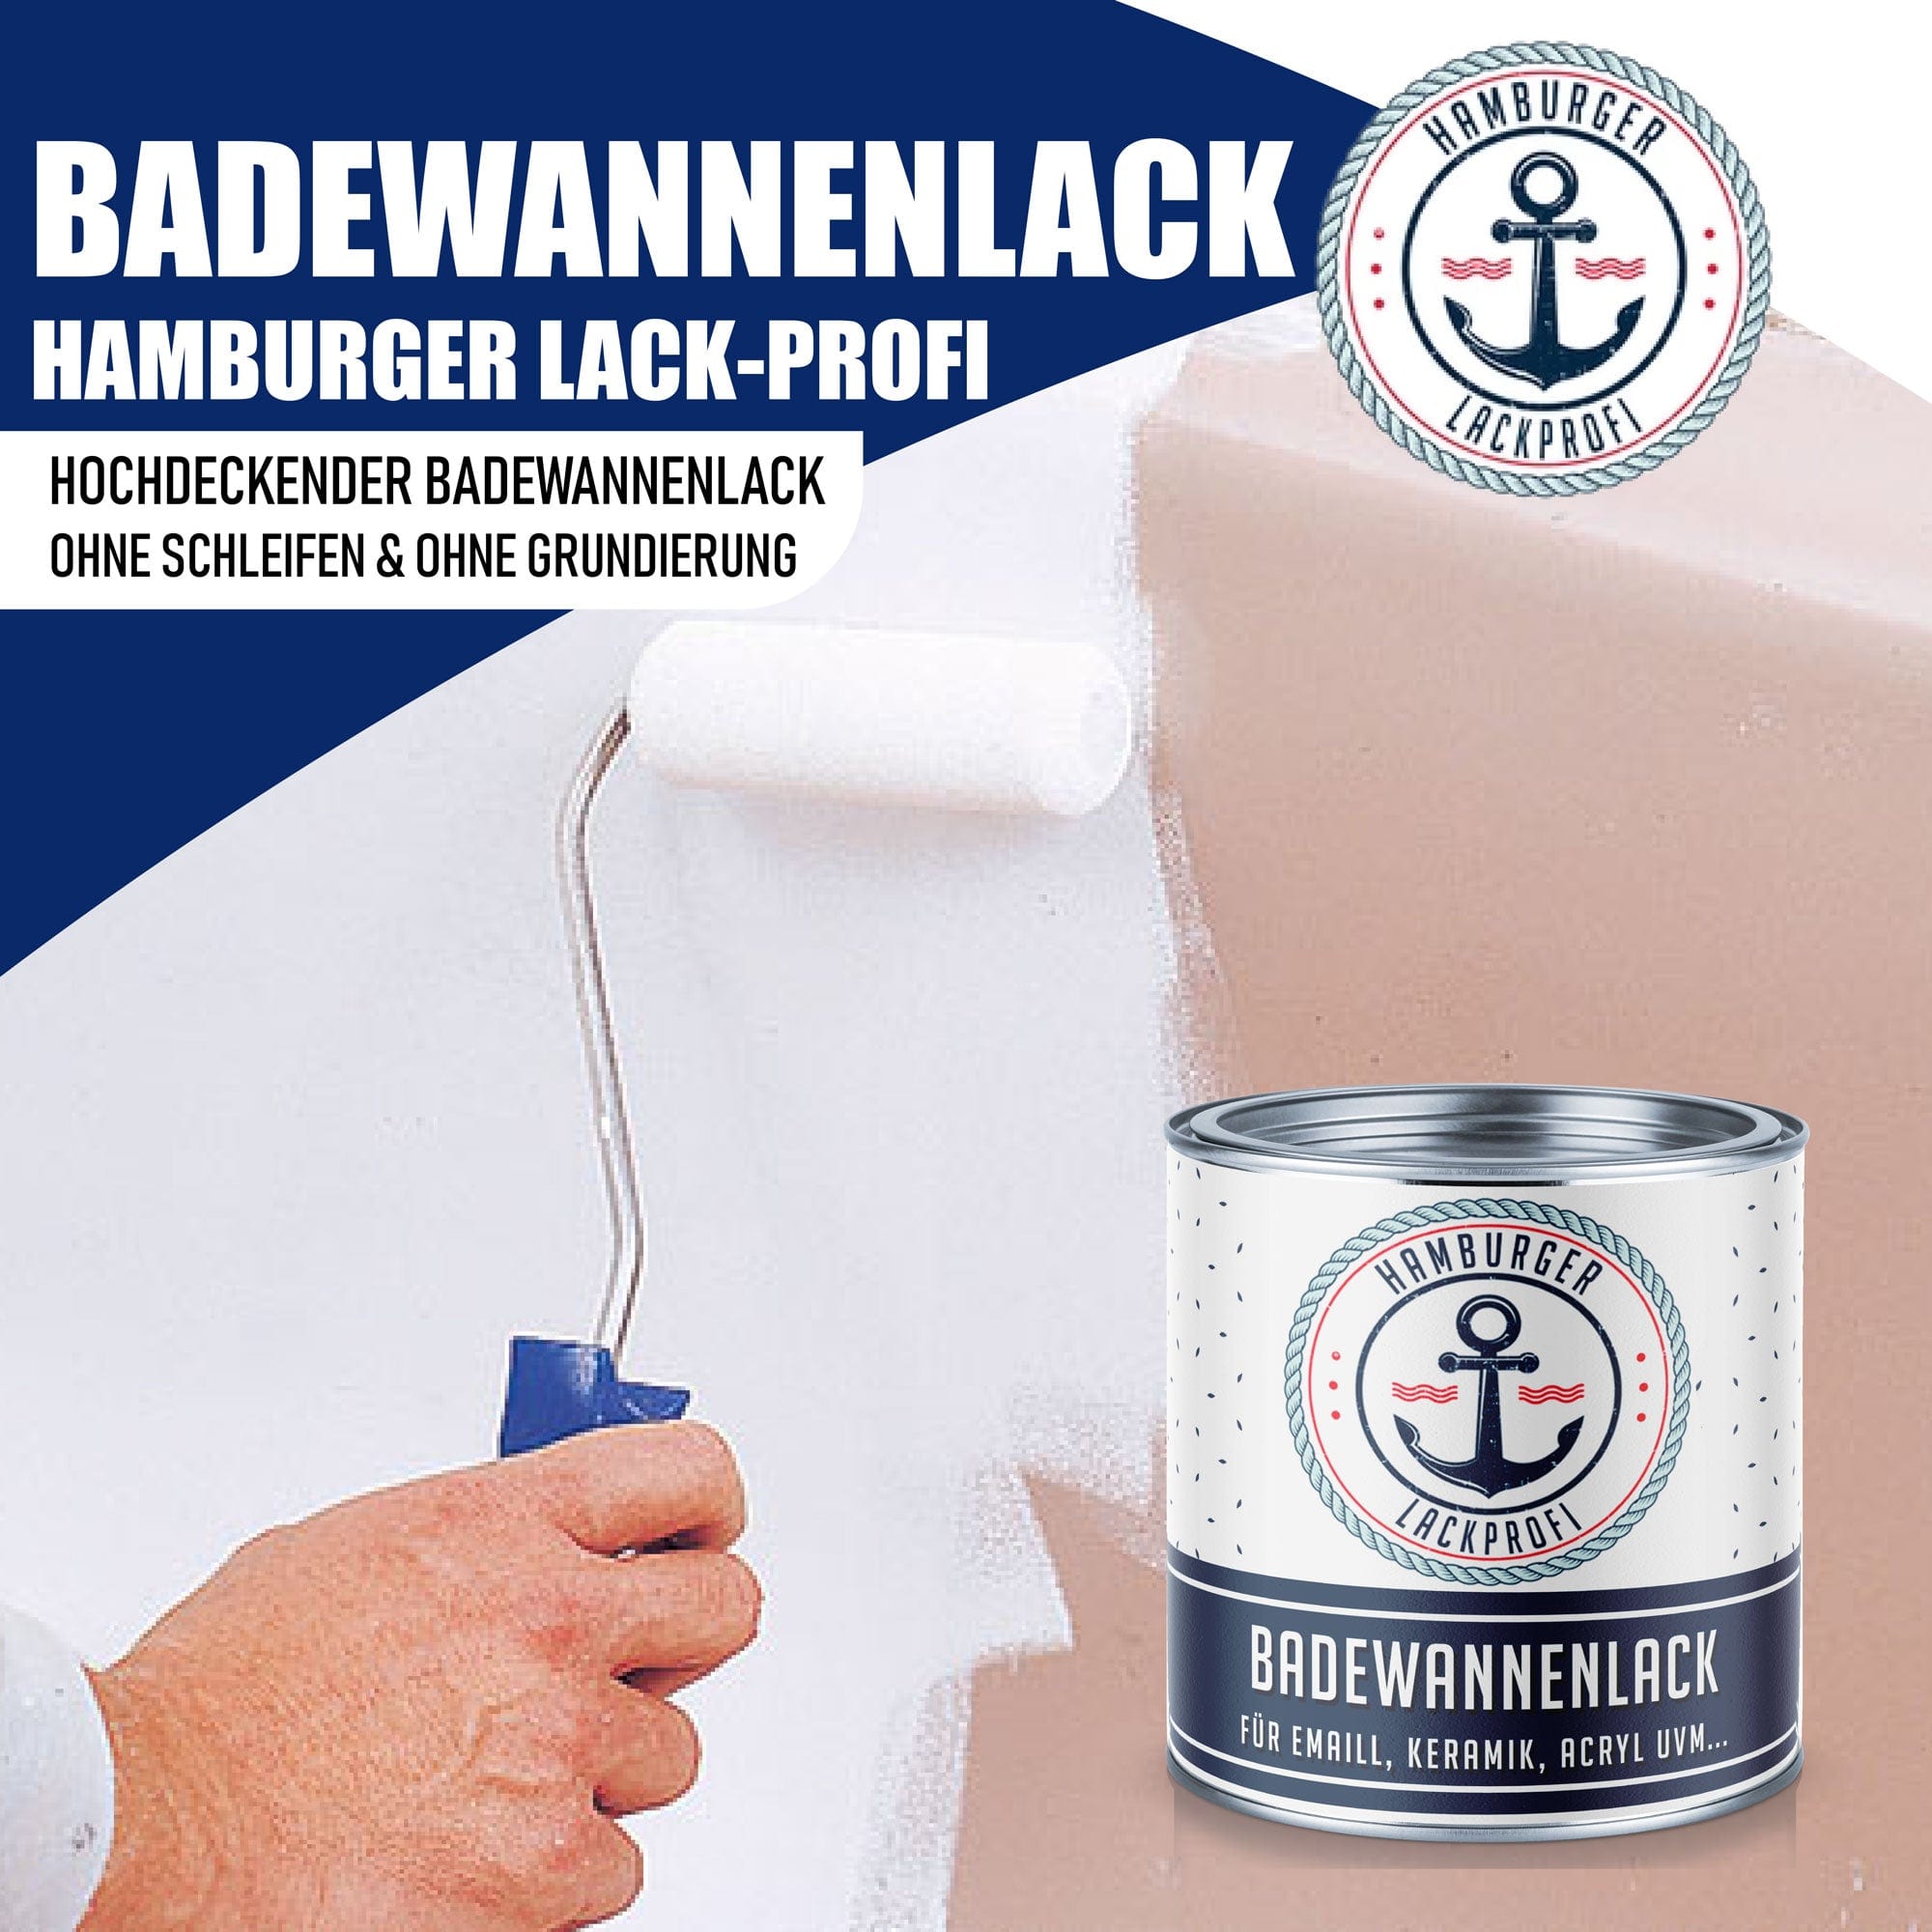 Hamburger Lack-Profi Badewannenlack Hamburger Lack-Profi 2K Badewannenlack Basaltgrau RAL 7012 - Glänzend / Seidenmatt / Matt